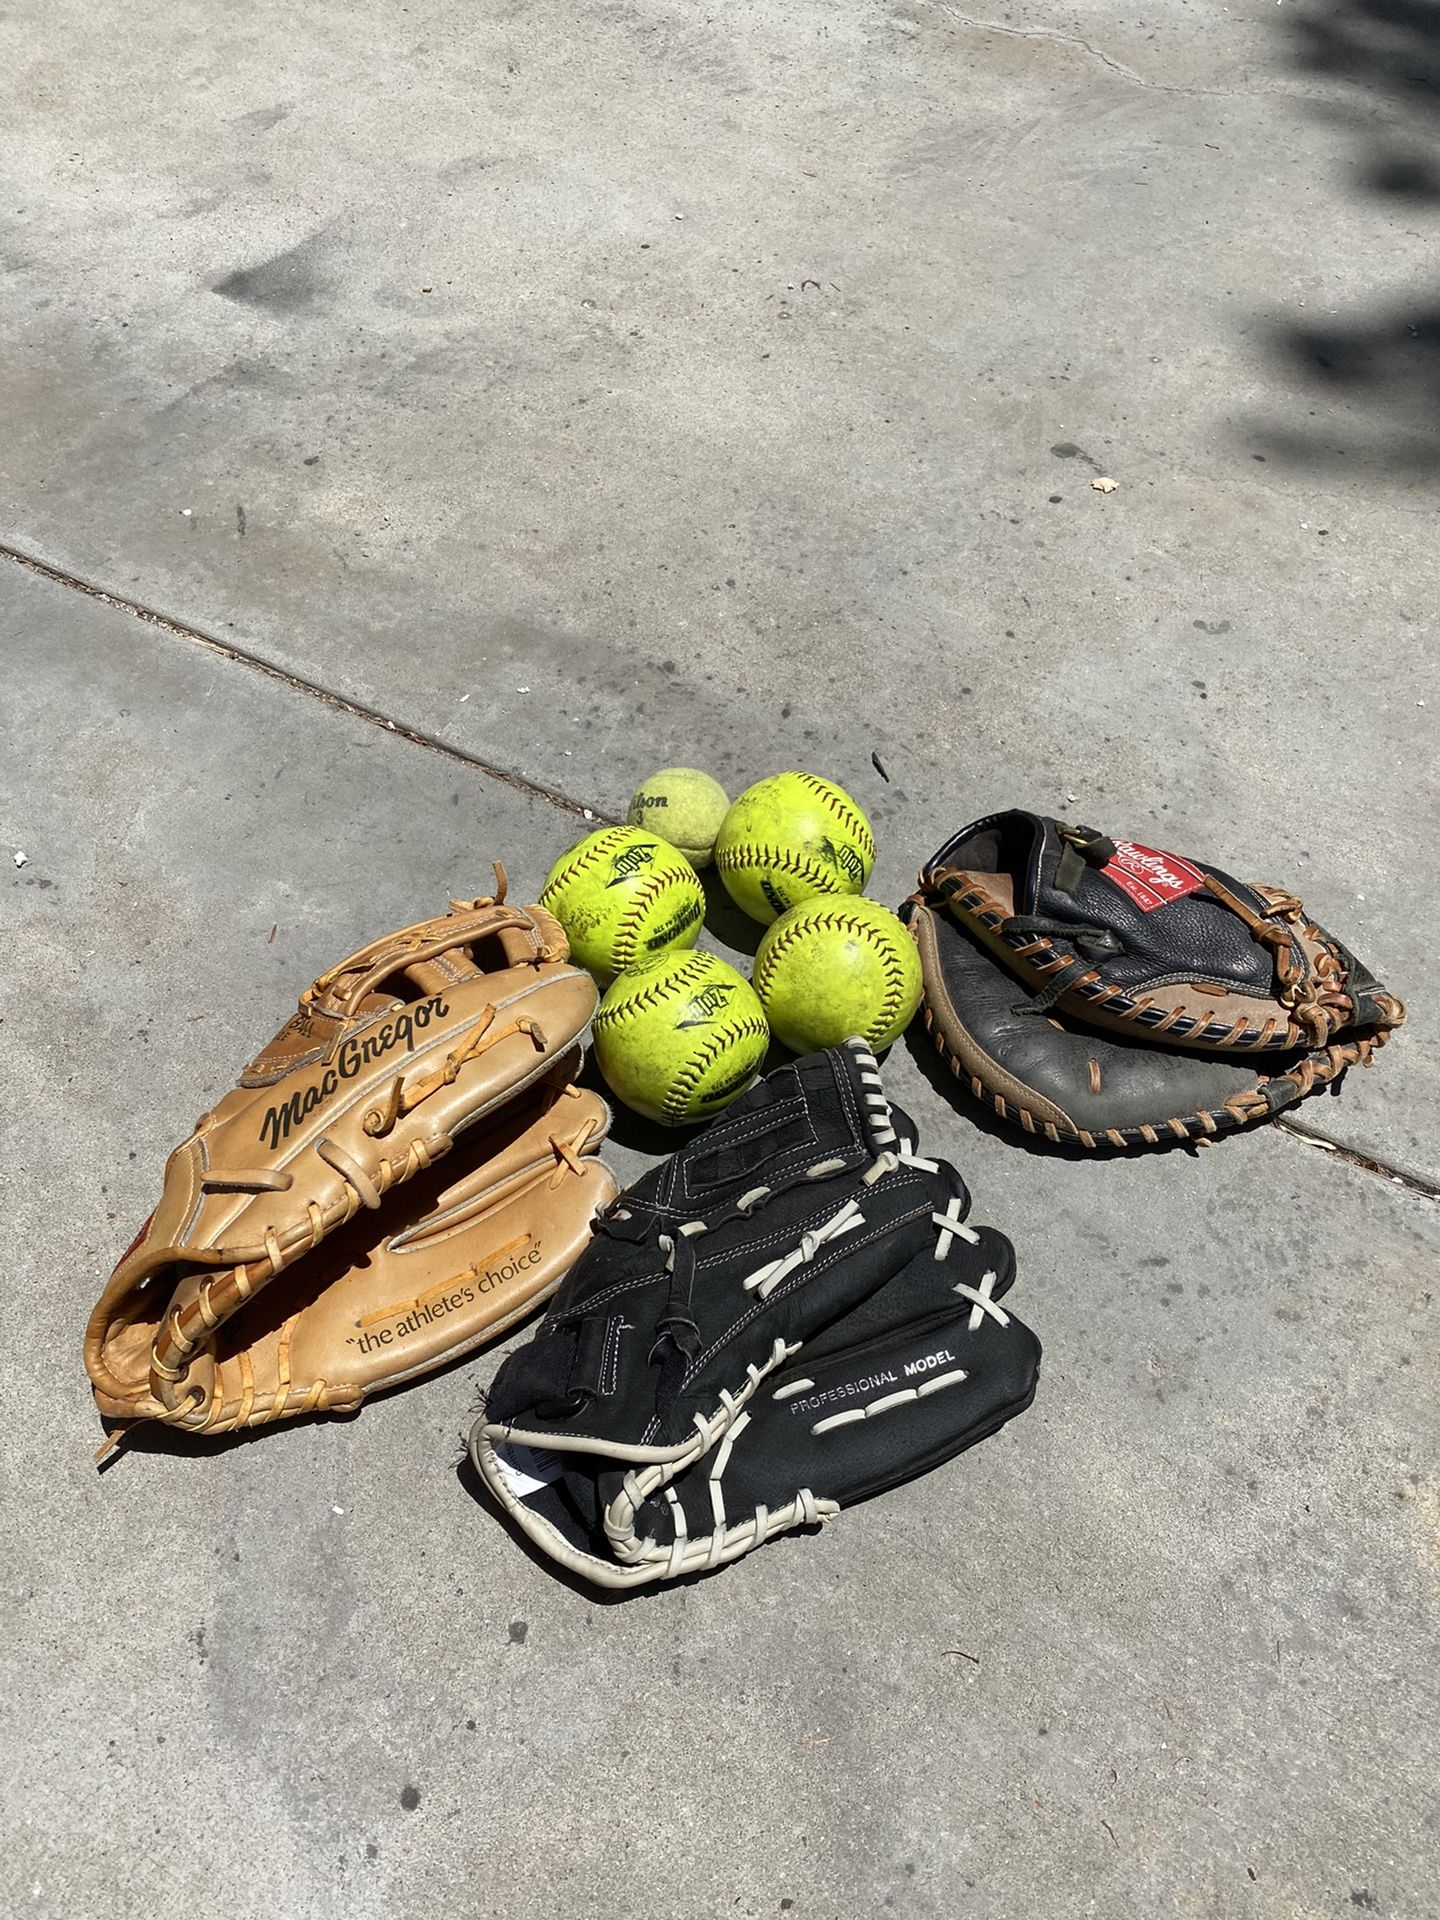 Baseball gloves and softballs